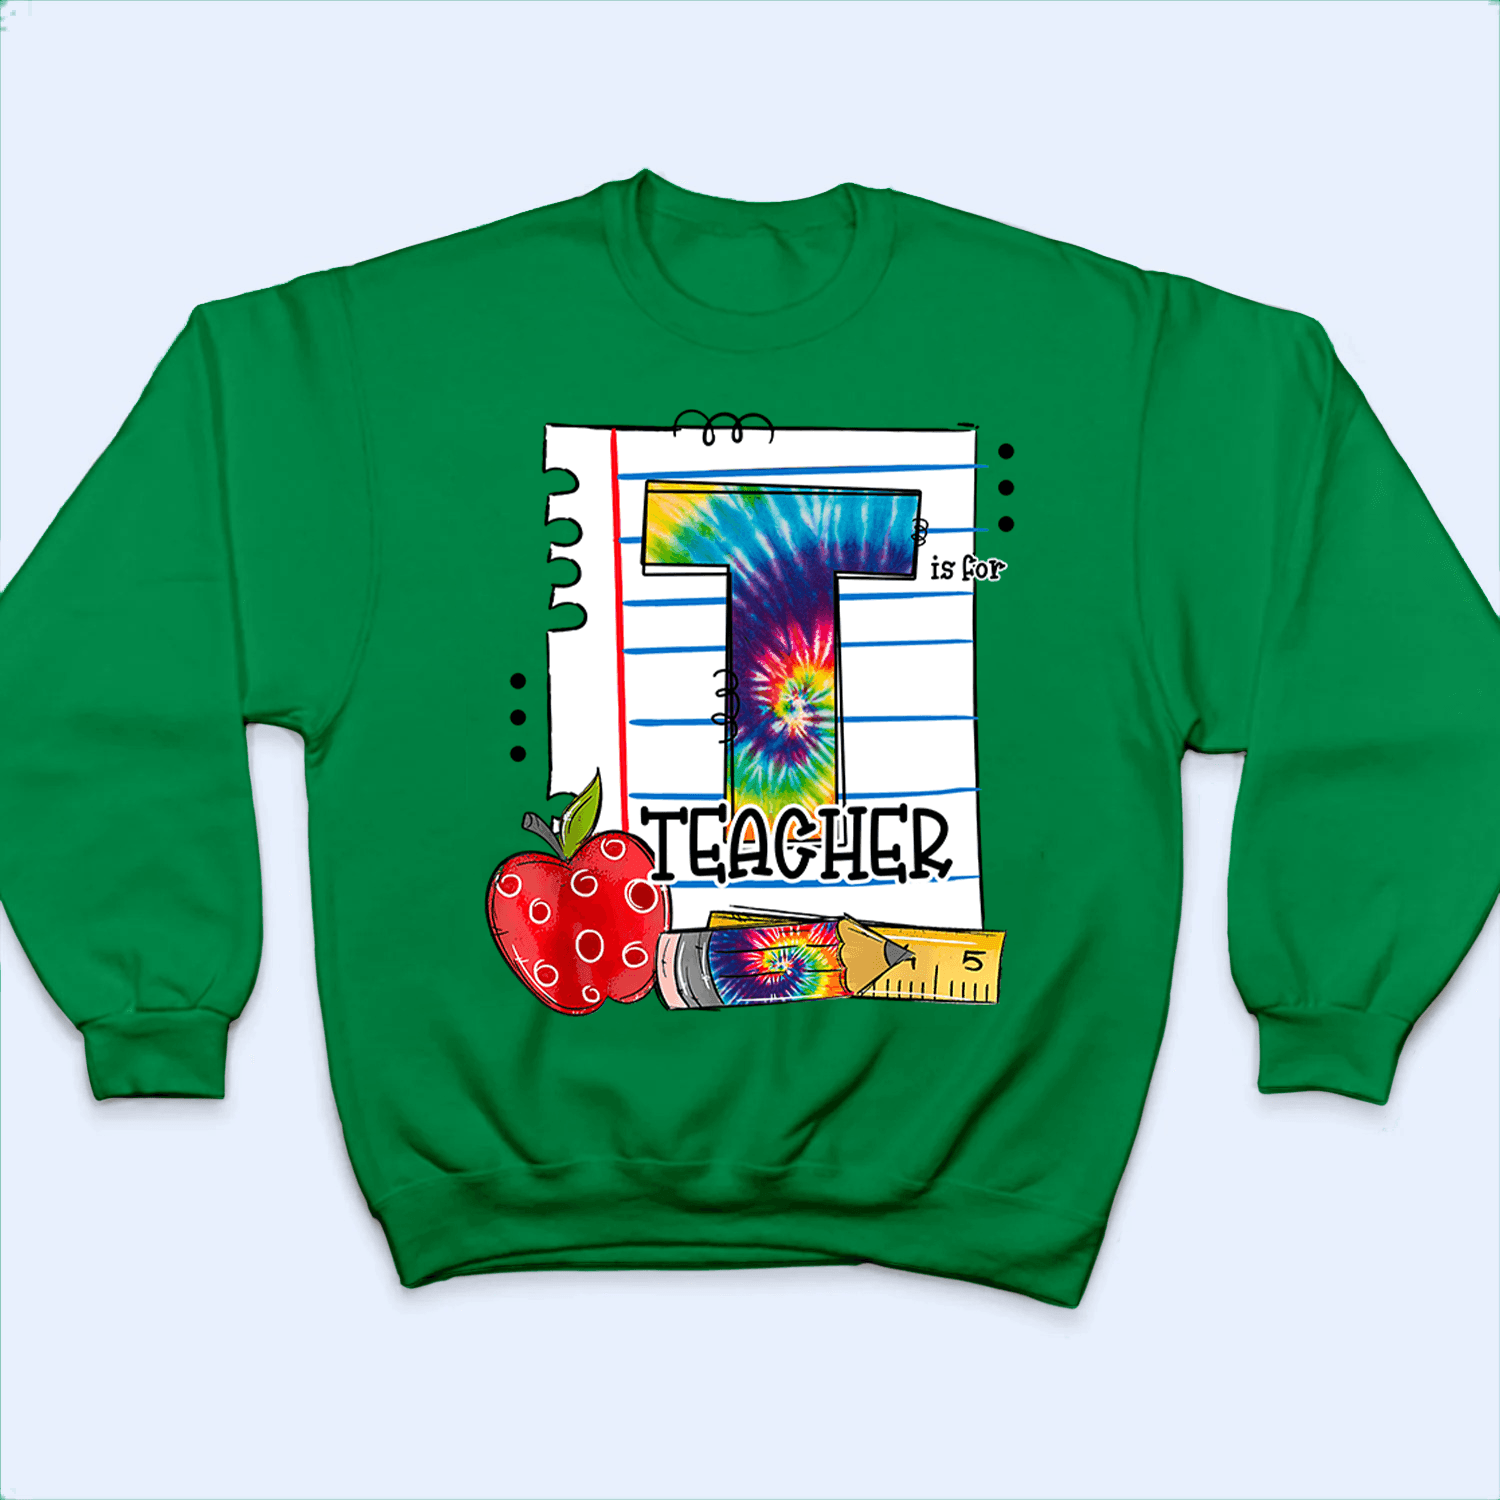 T Is For Teacher Tie Dye - Personalized Custom T Shirt - Back To School/First Day Of School, Birthday, Loving, Funny Gift for Teacher, Kindergarten, Preschool, Pre K, Paraprofessional